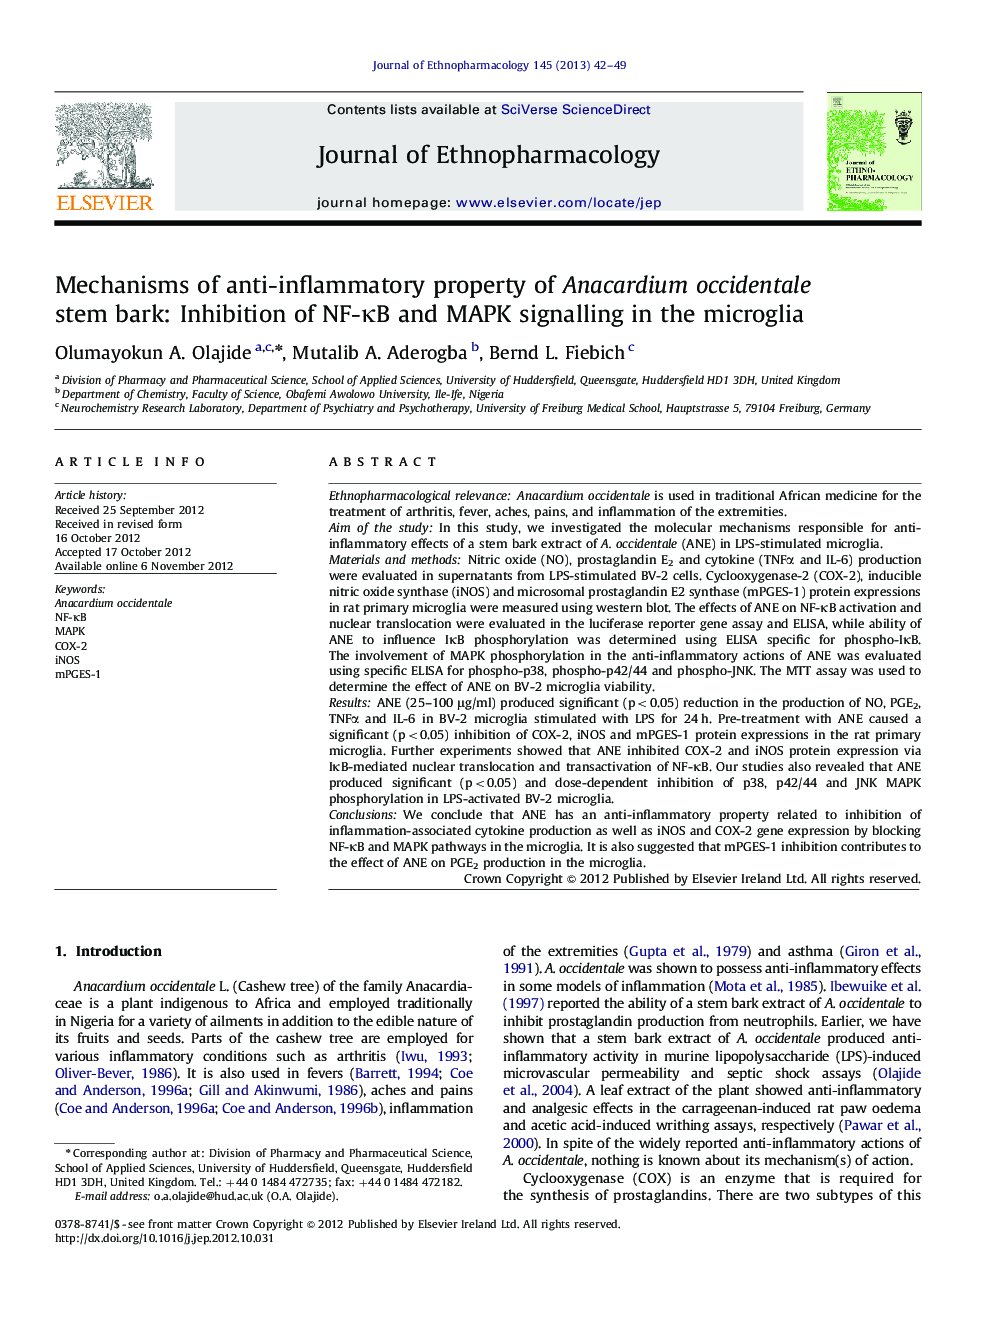 Mechanisms of anti-inflammatory property of Anacardium occidentale stem bark: Inhibition of NF-ÎºB and MAPK signalling in the microglia